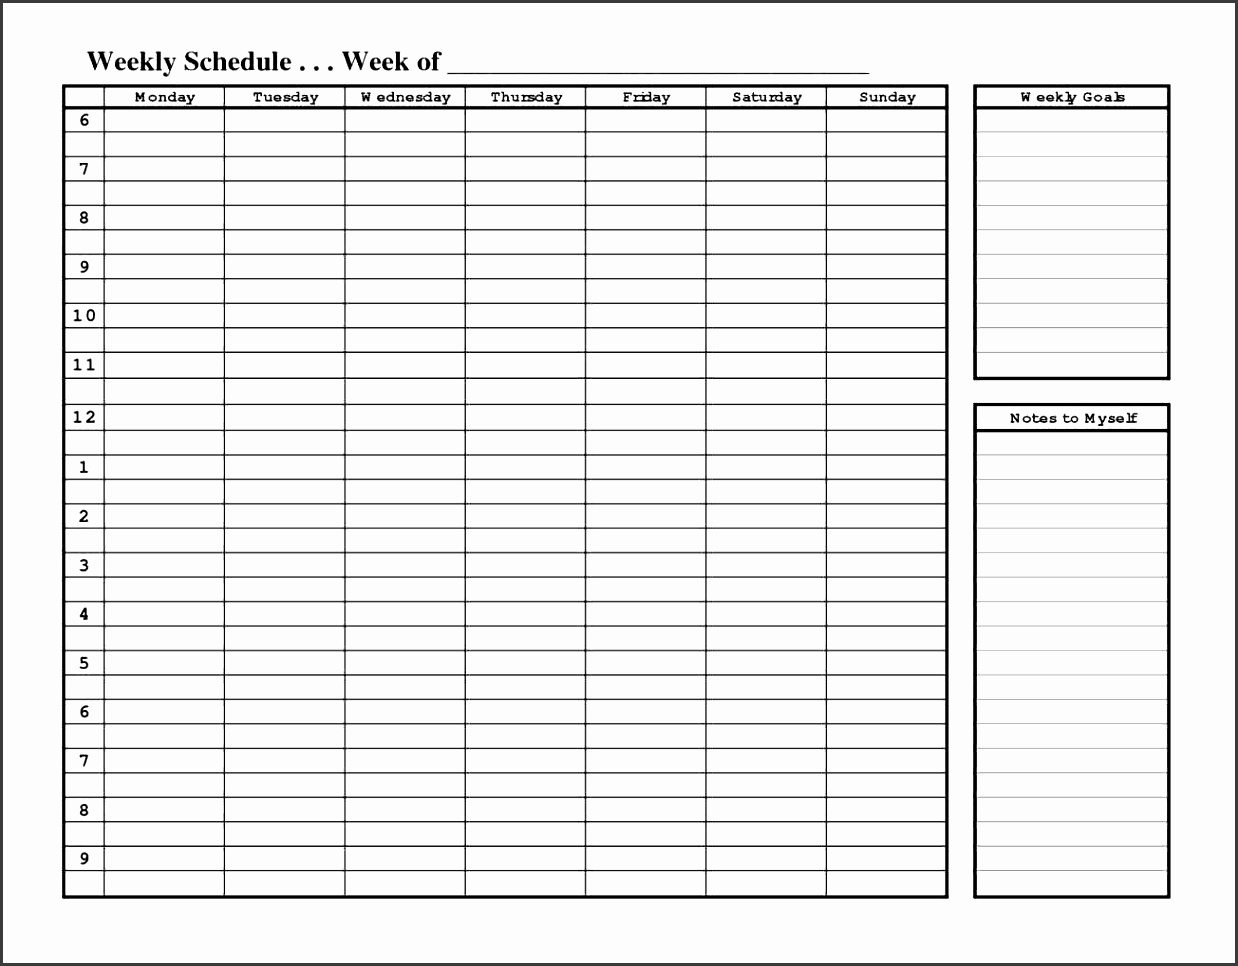 weekly schedule template excel ideen auf pinterest free templates for free schedule template weekly weekly schedule